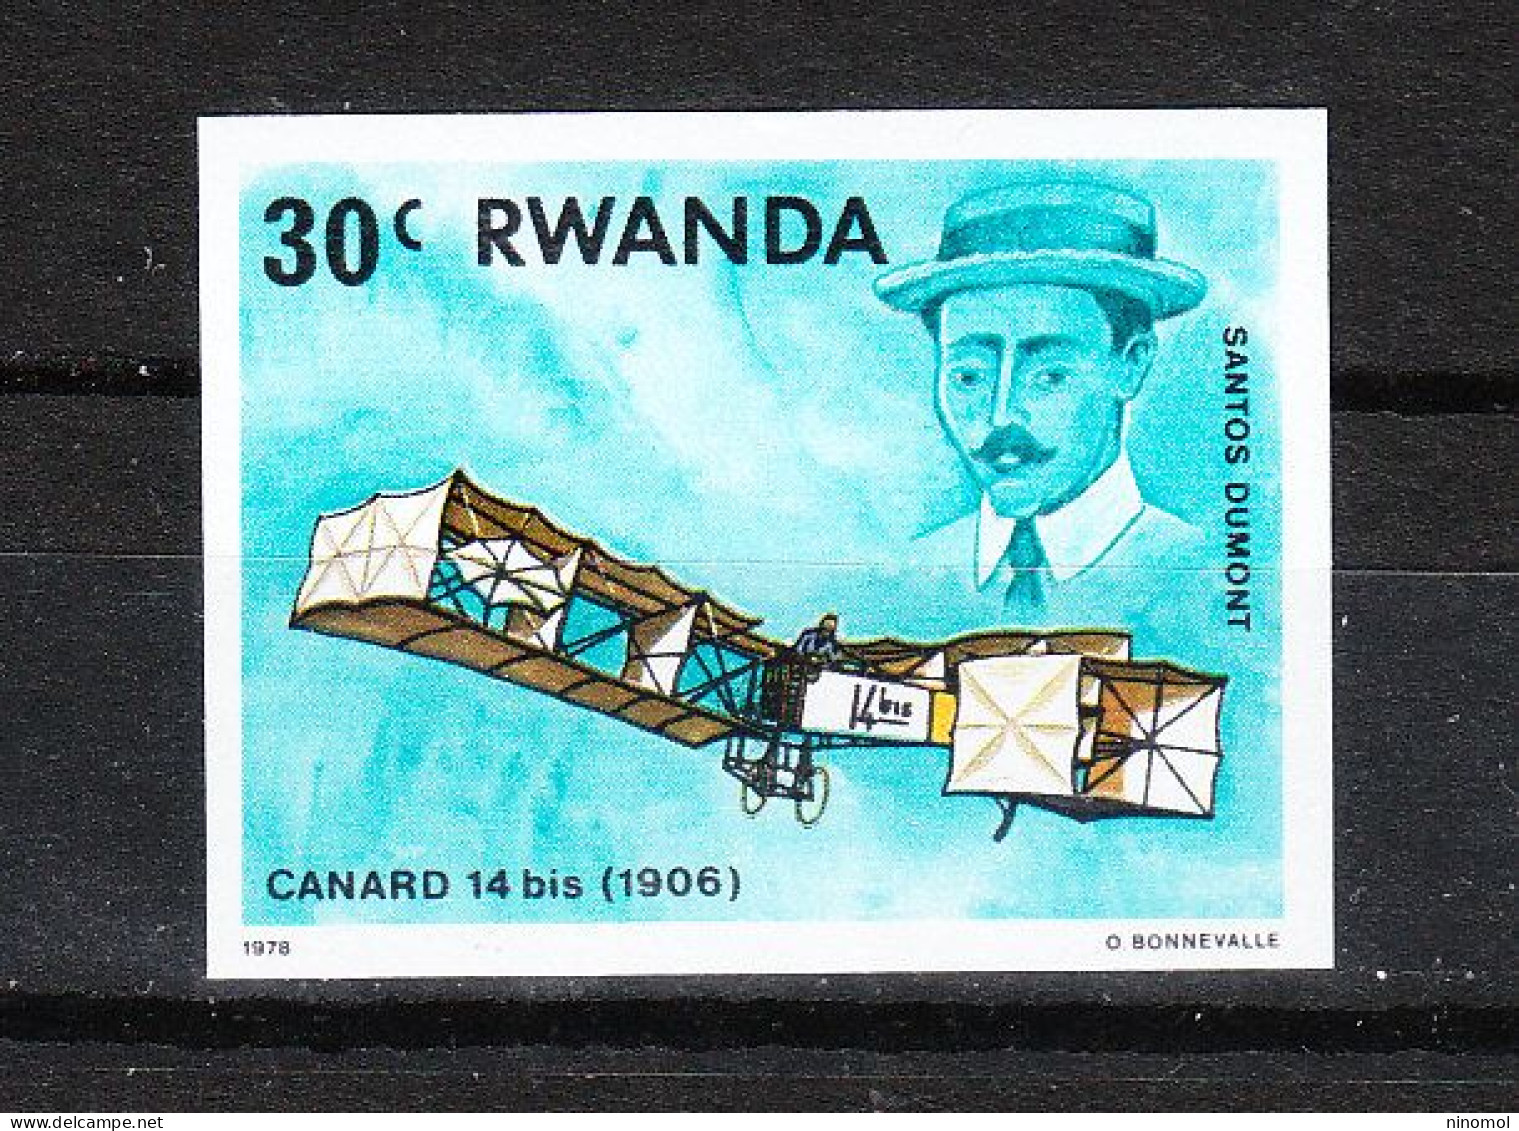 Rwanda  -  1978.  Storia Del Volo.History Of Flight. Santos Dumont.  MNH Imperf. - Otros (Aire)